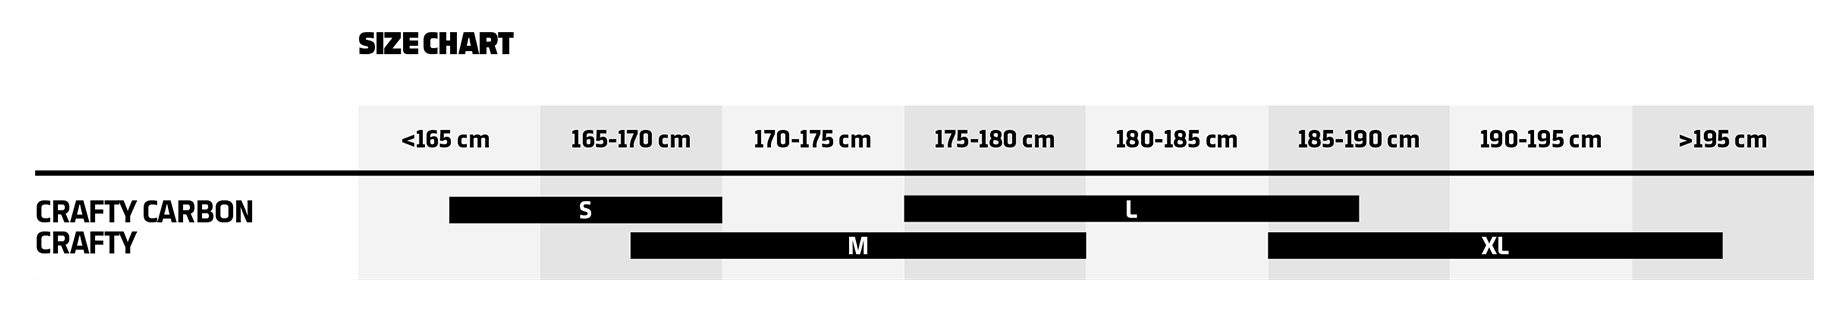 Mondraker 2023 Crafty Size Guide